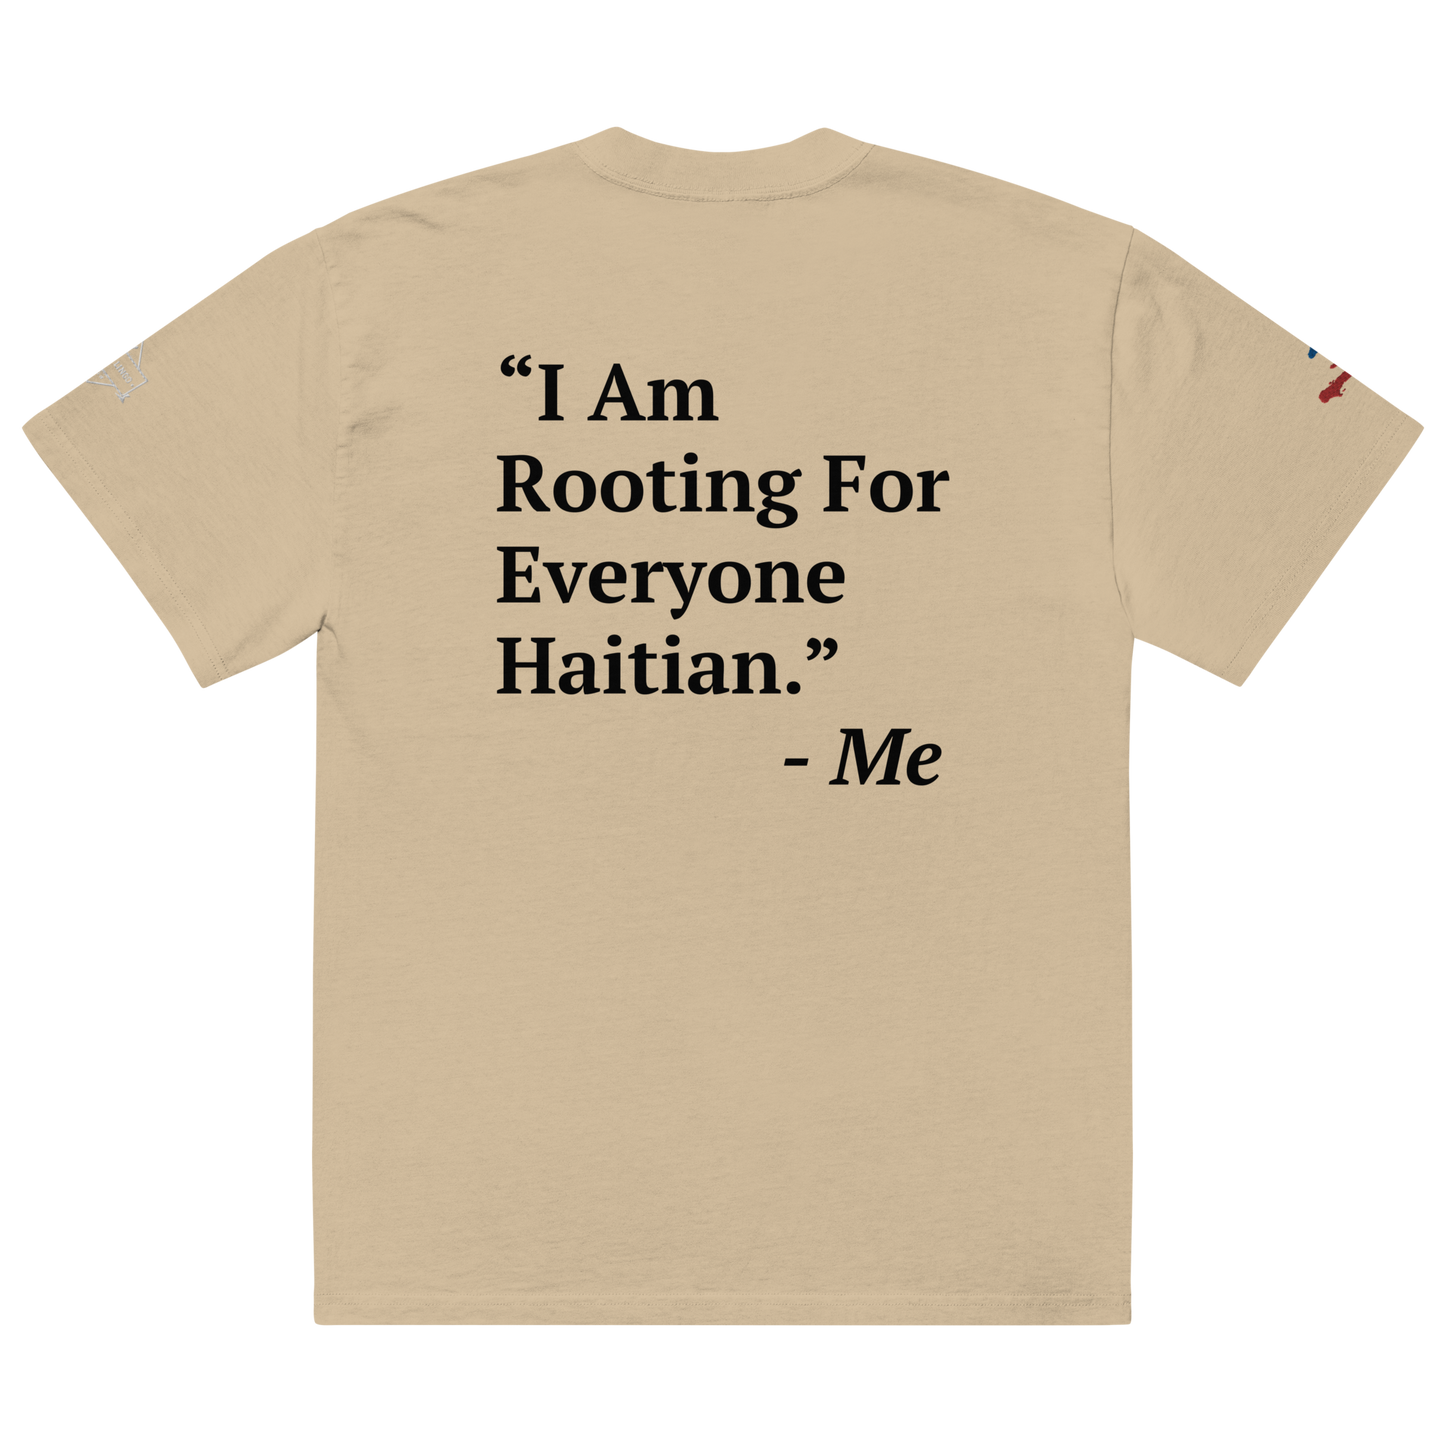 Haiti Oversized faded t-shirt